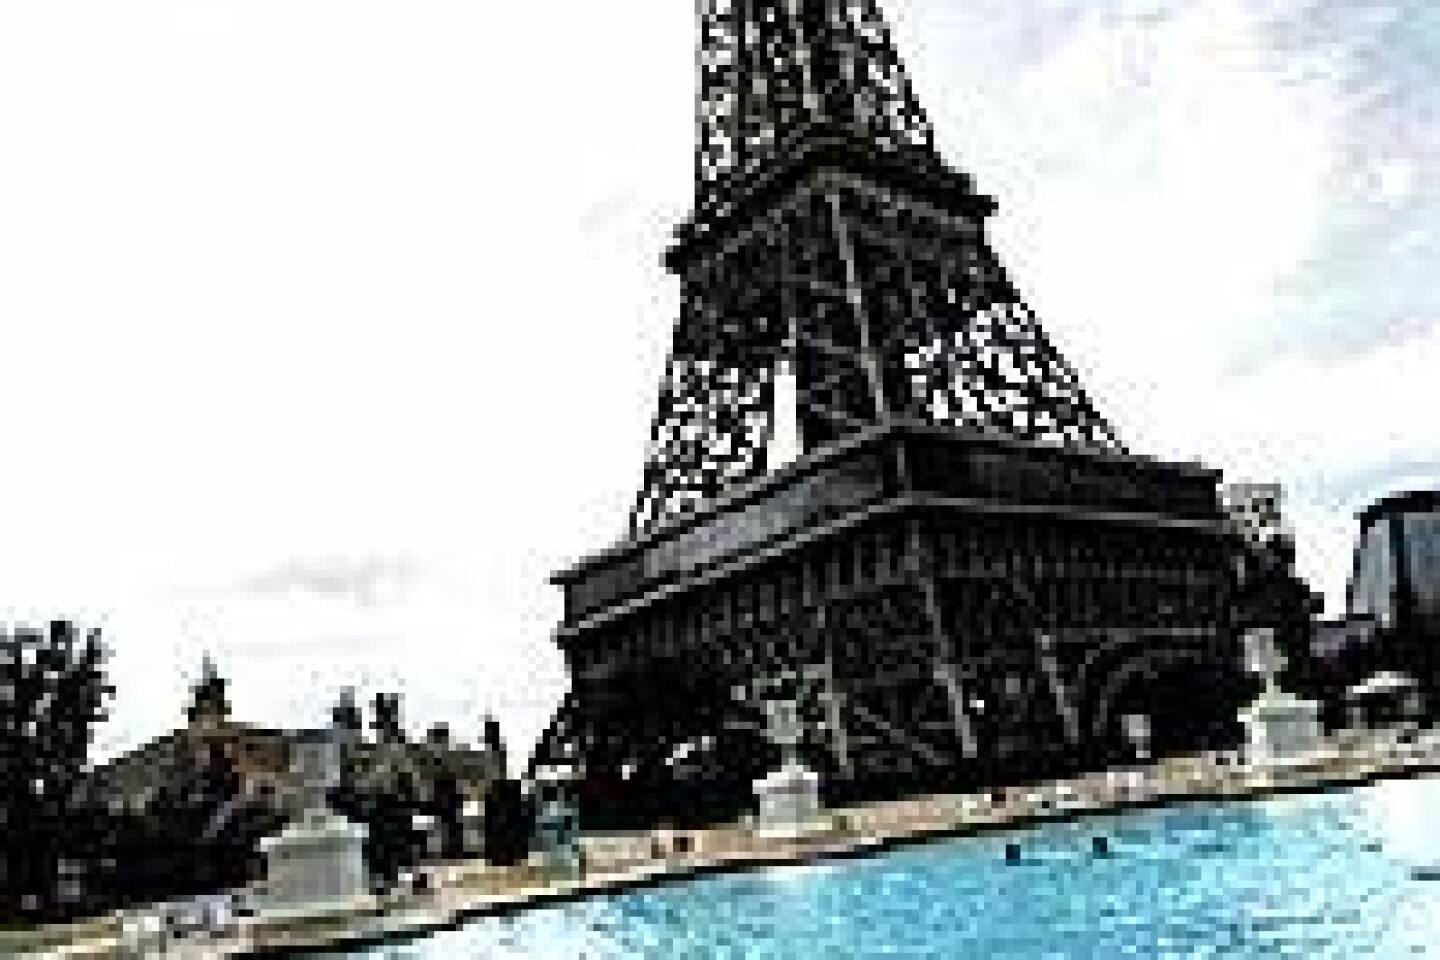 PARIS LAS VEGAS POOL VIRTUAL TOUR